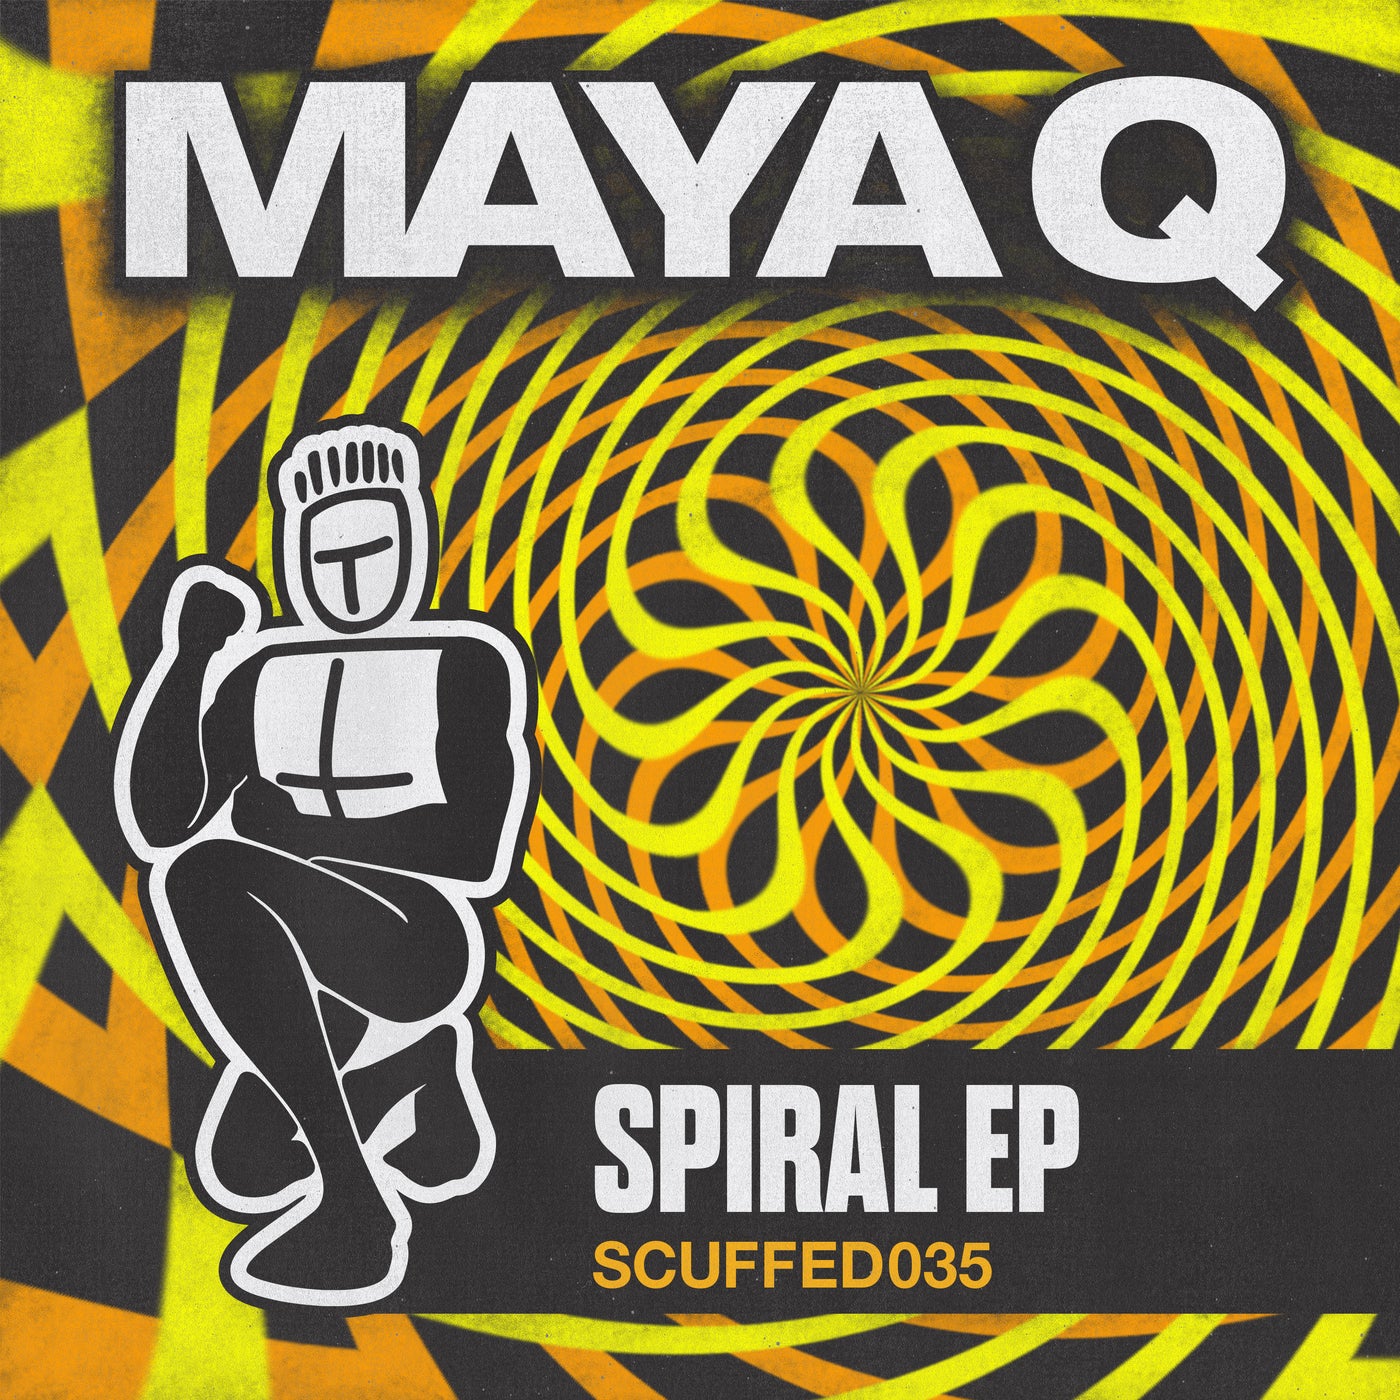 Spiral EP